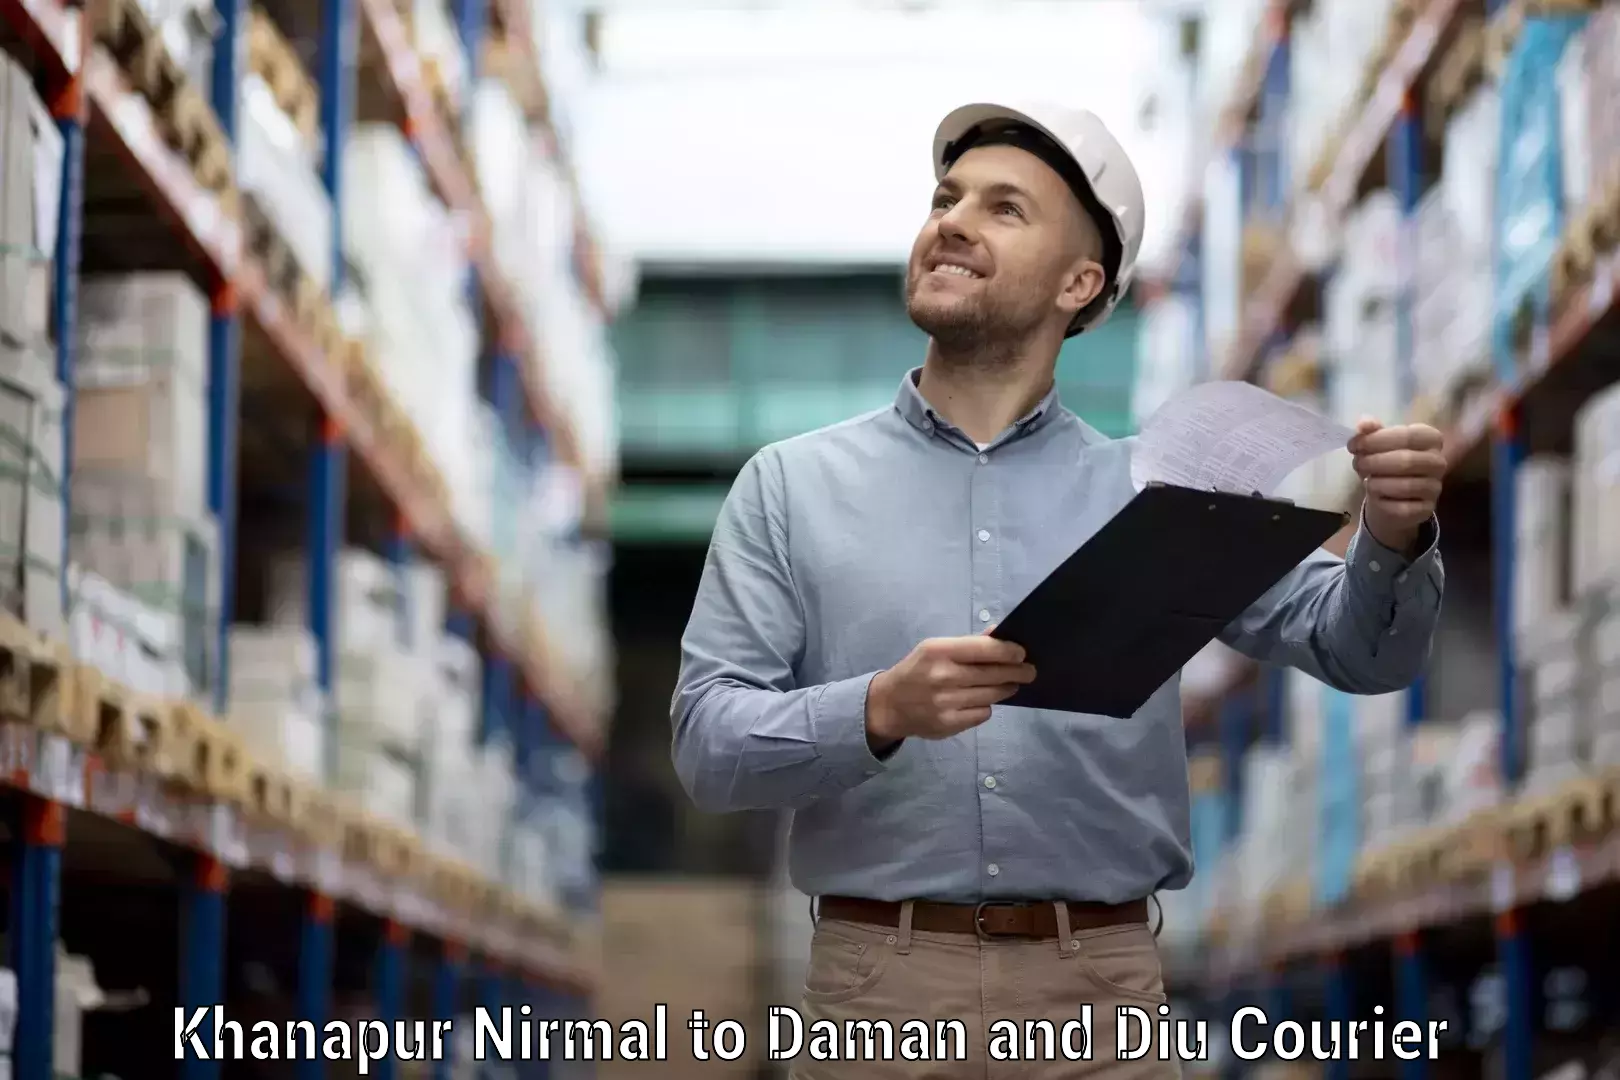 Speedy delivery service Khanapur Nirmal to Daman